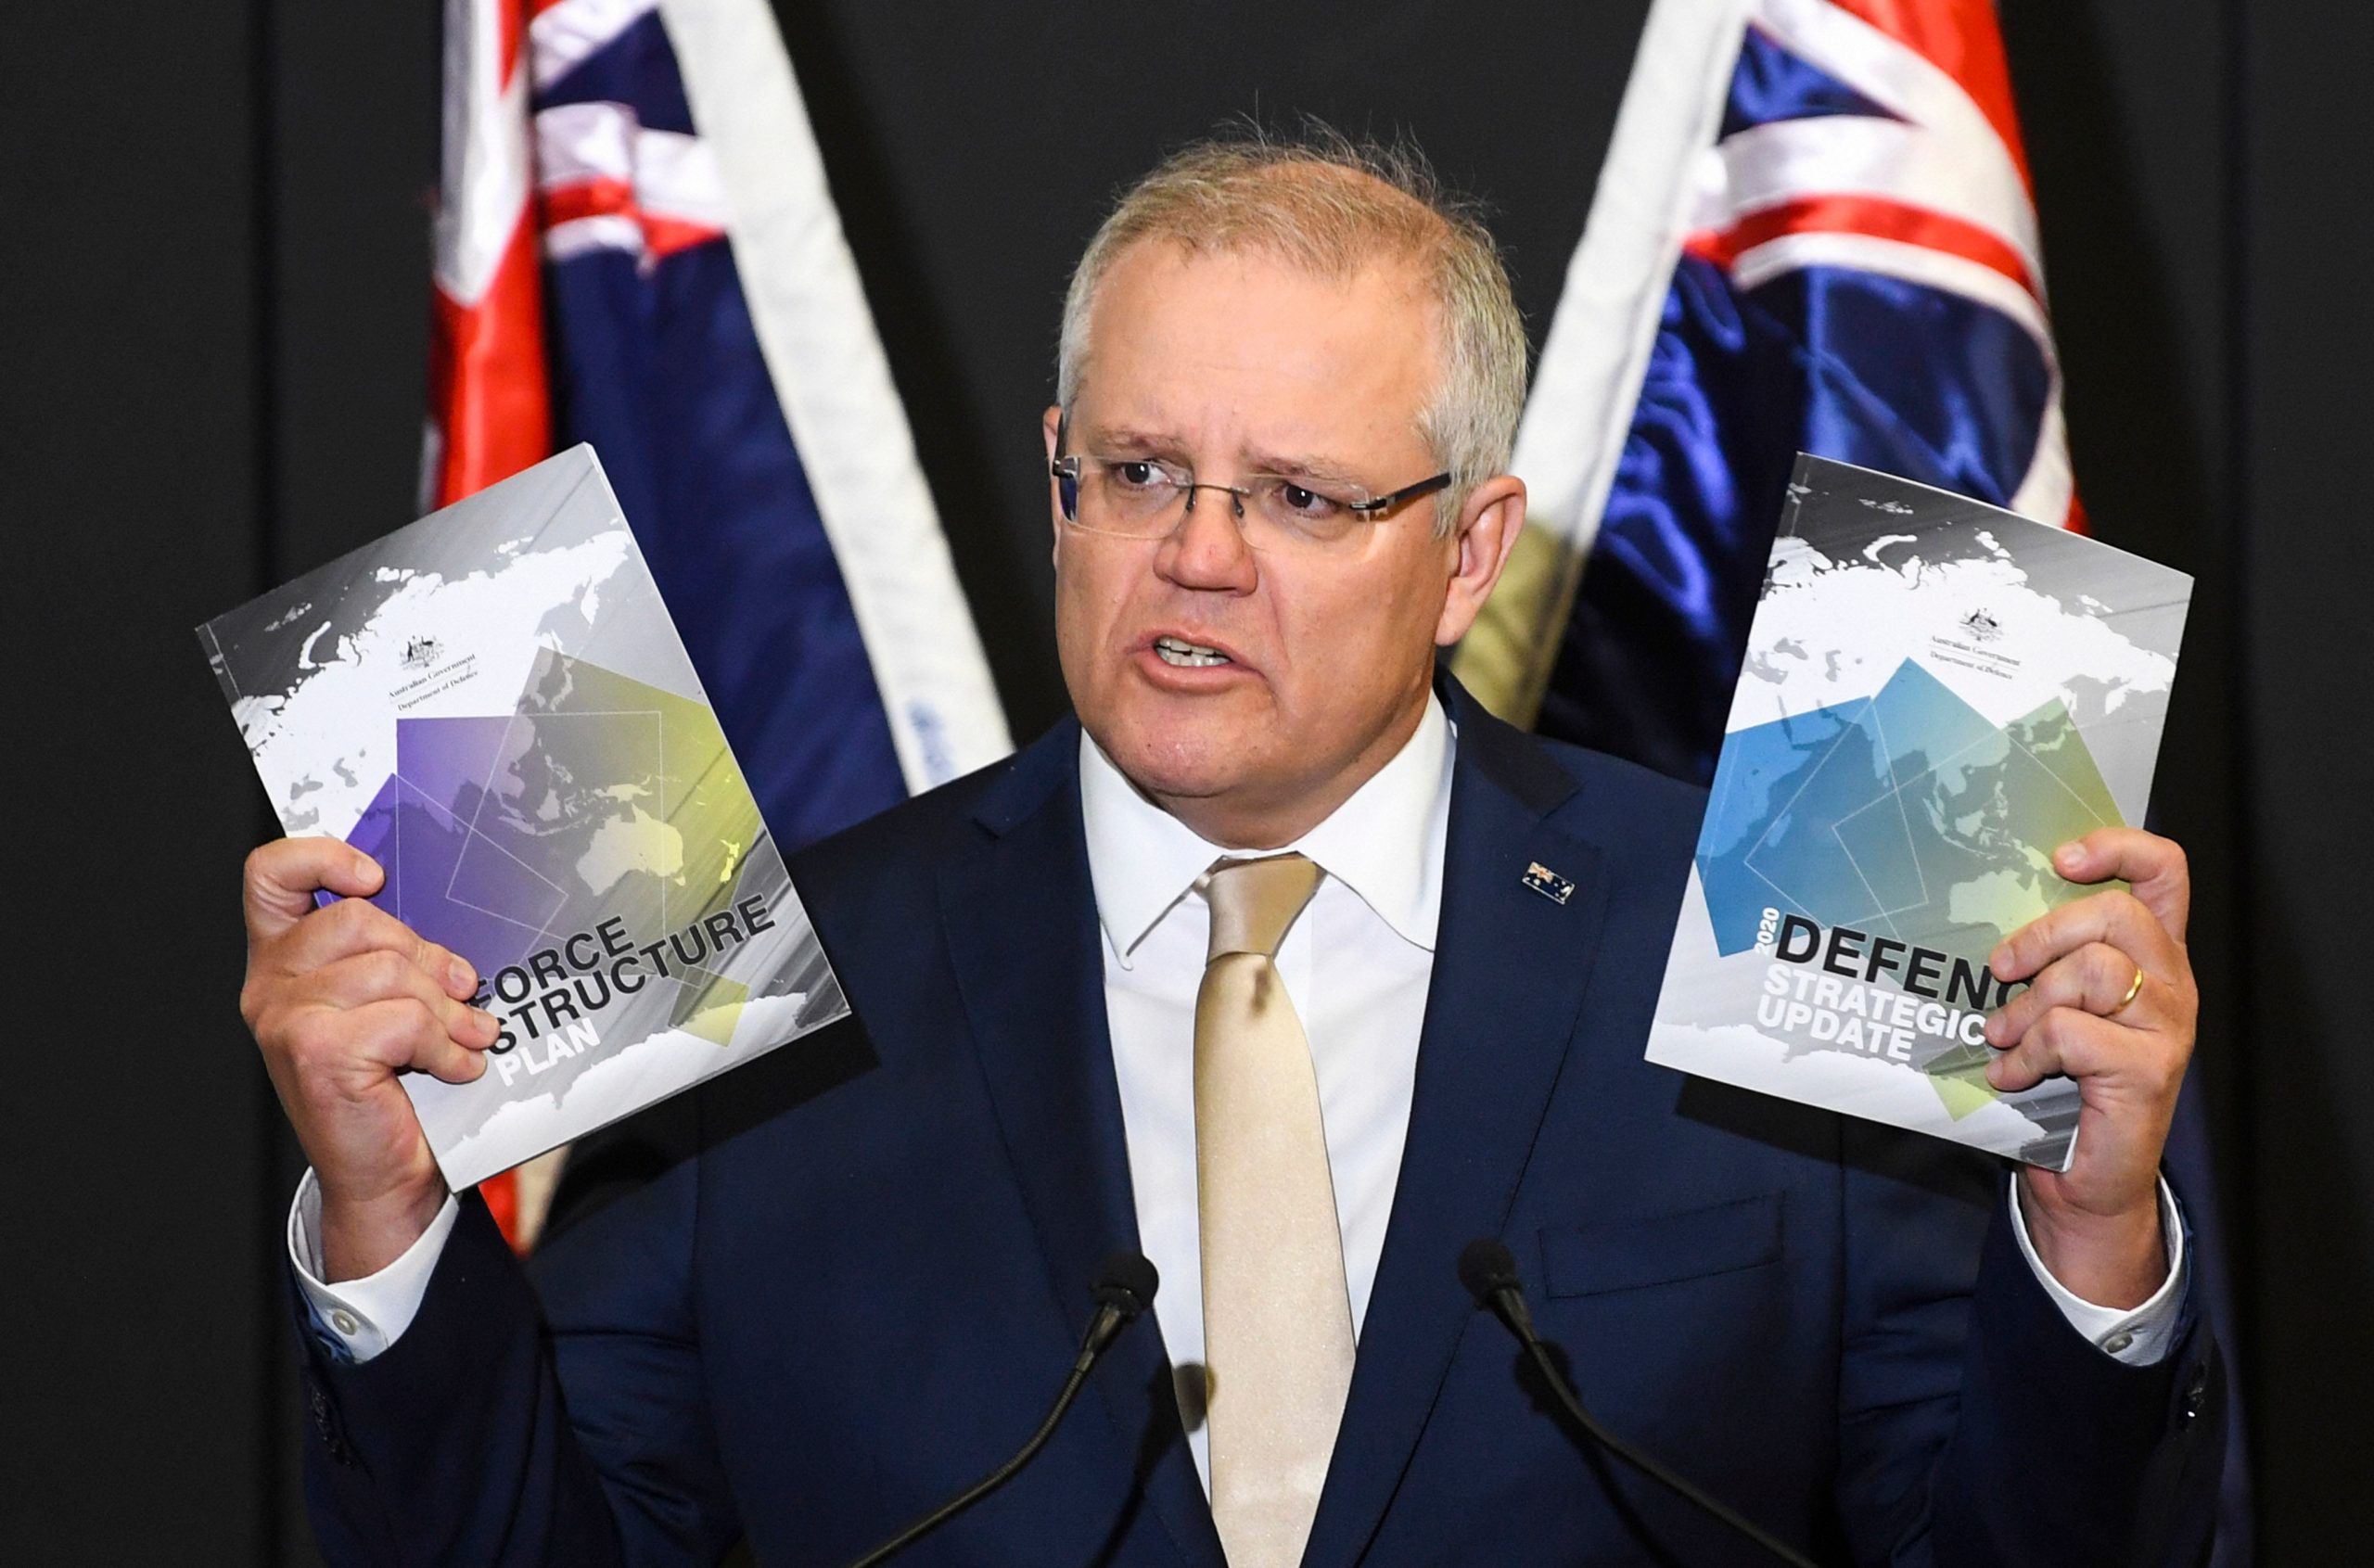 Australian PM slams China for ‘outrageous’ tweet, seeks apology